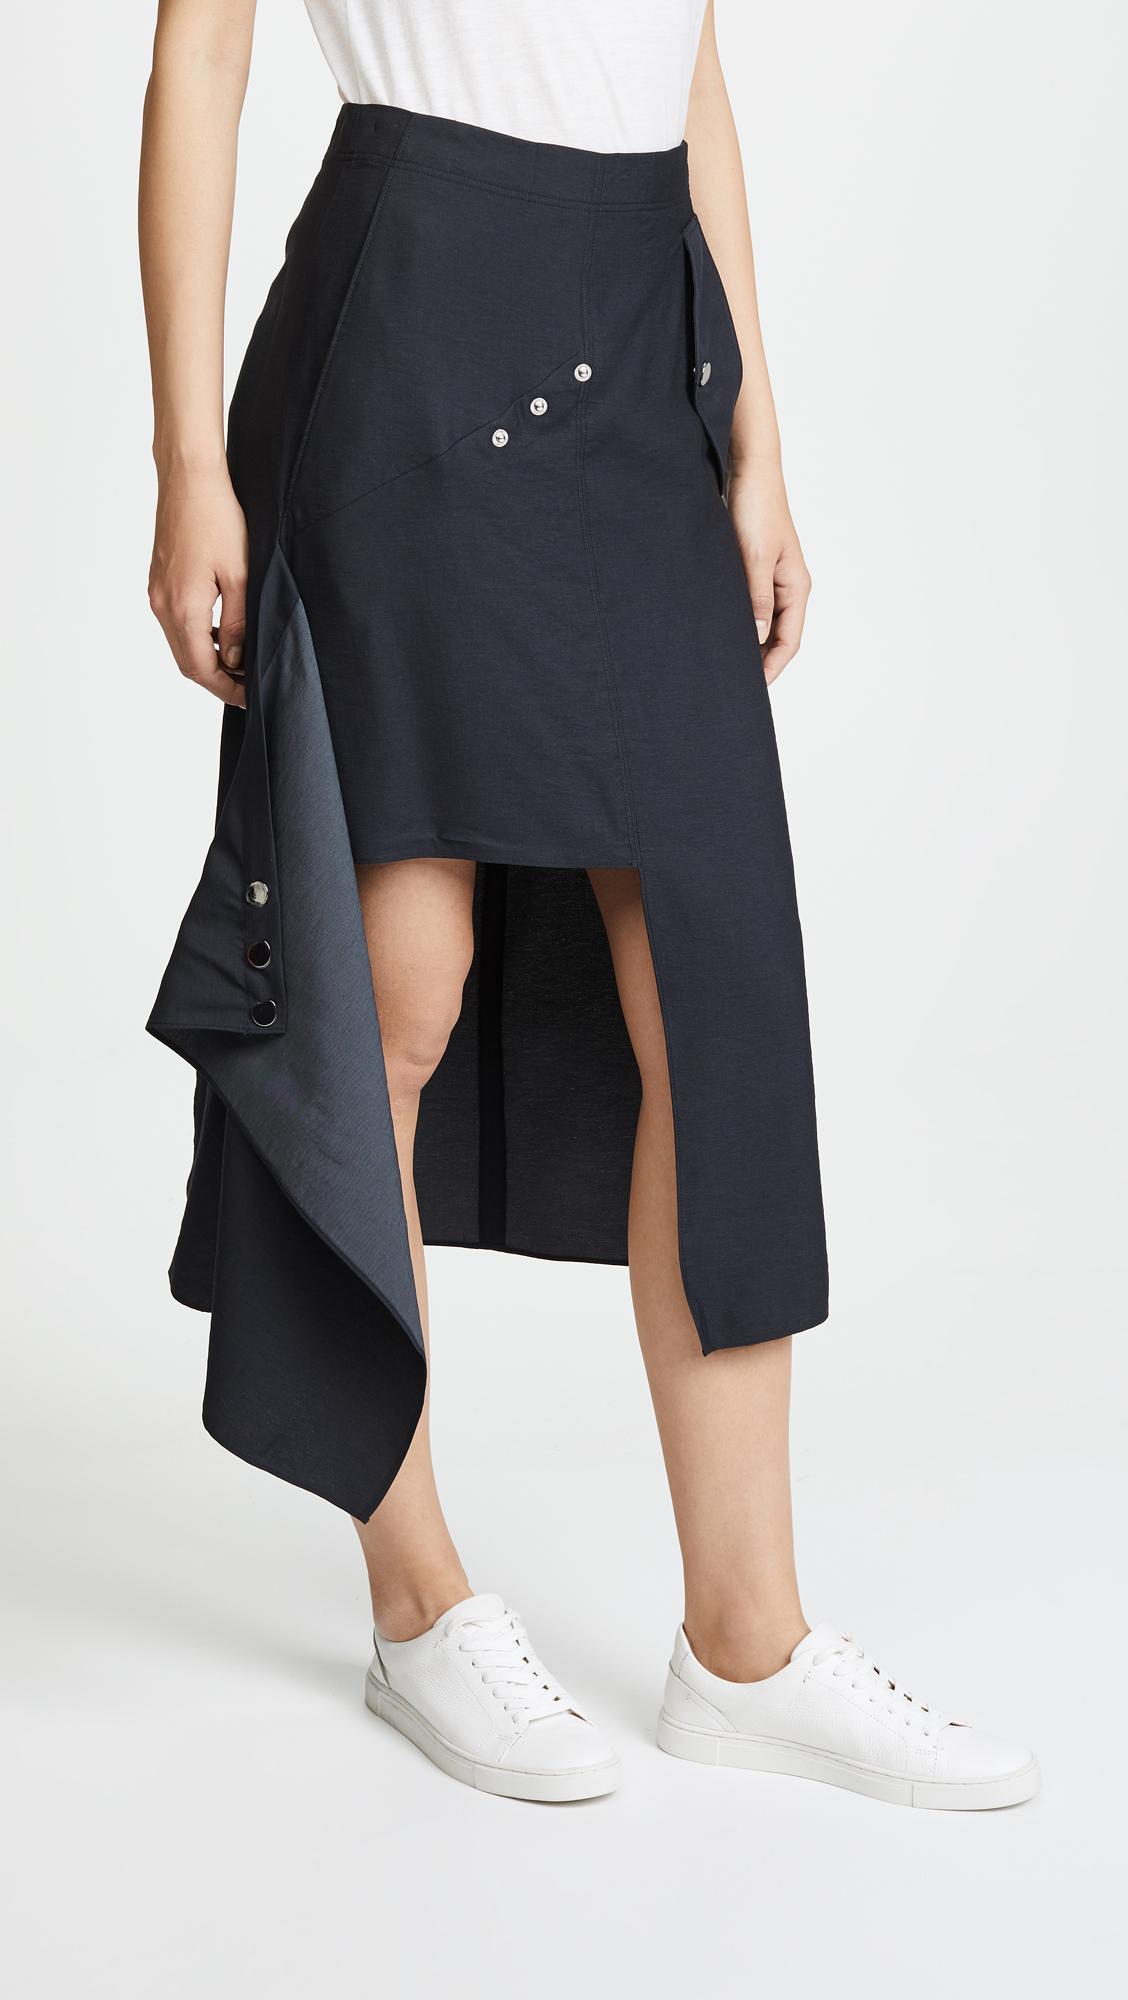 Tibi Synthetic Asymmetrical Flap Skirt in Black - Lyst